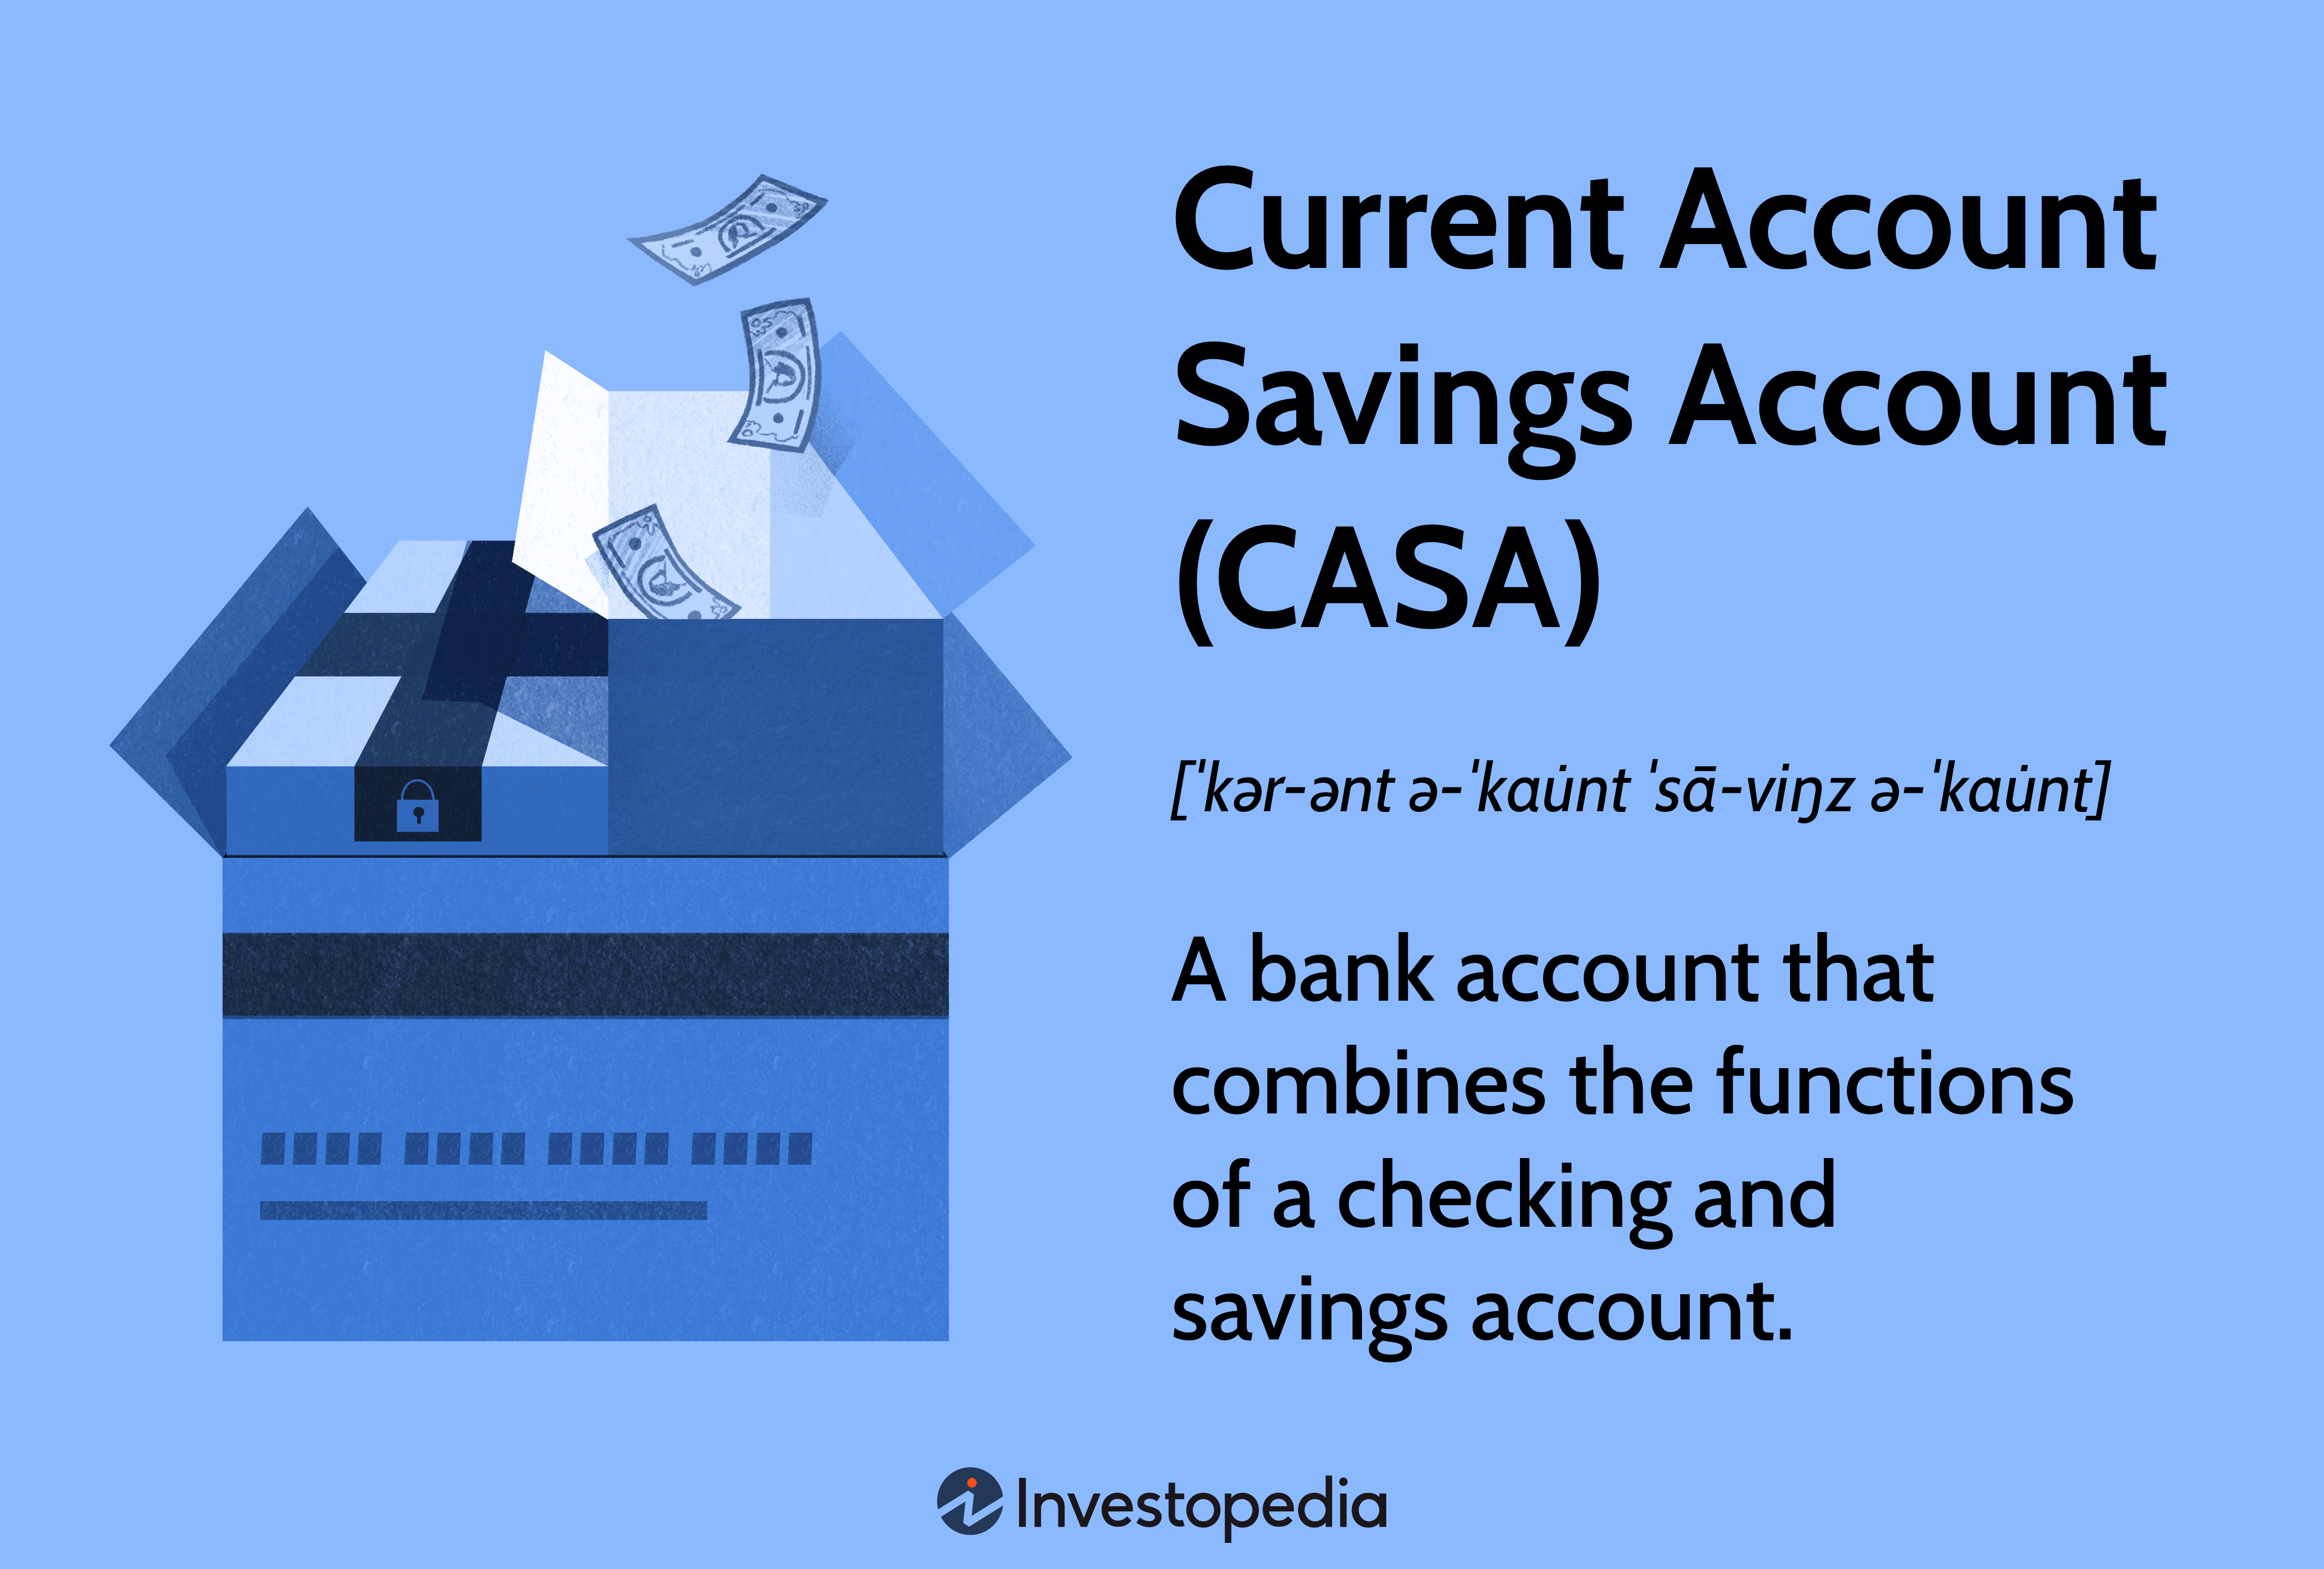 Current Account Savings Account (CASA)